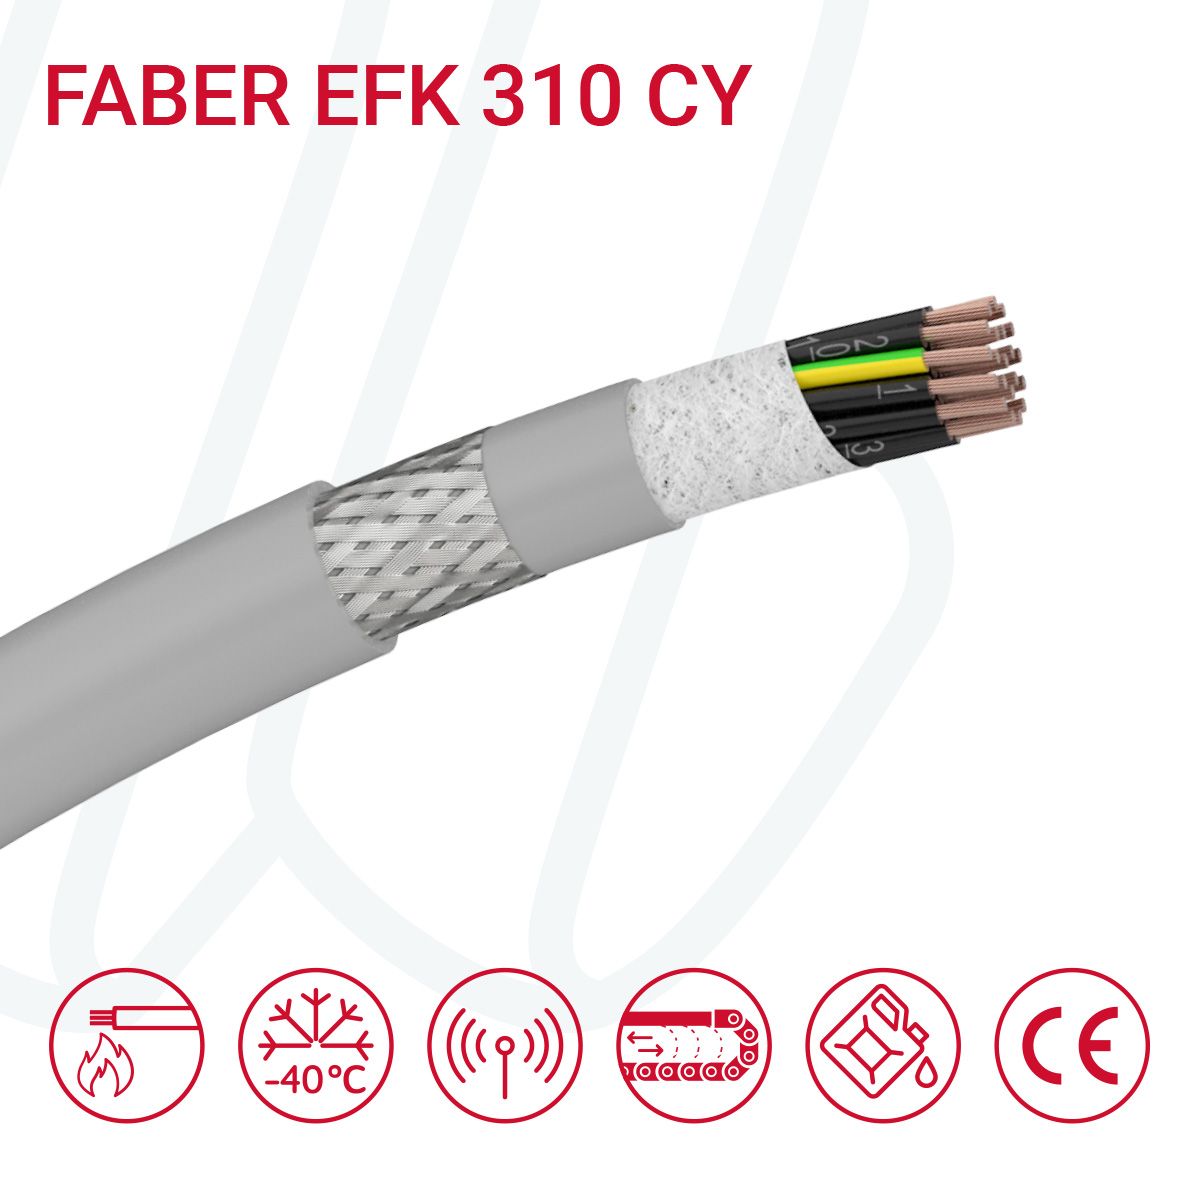 Кабель FABER EFK 310 CY 03G1 cUL сірий, 03, 1.0